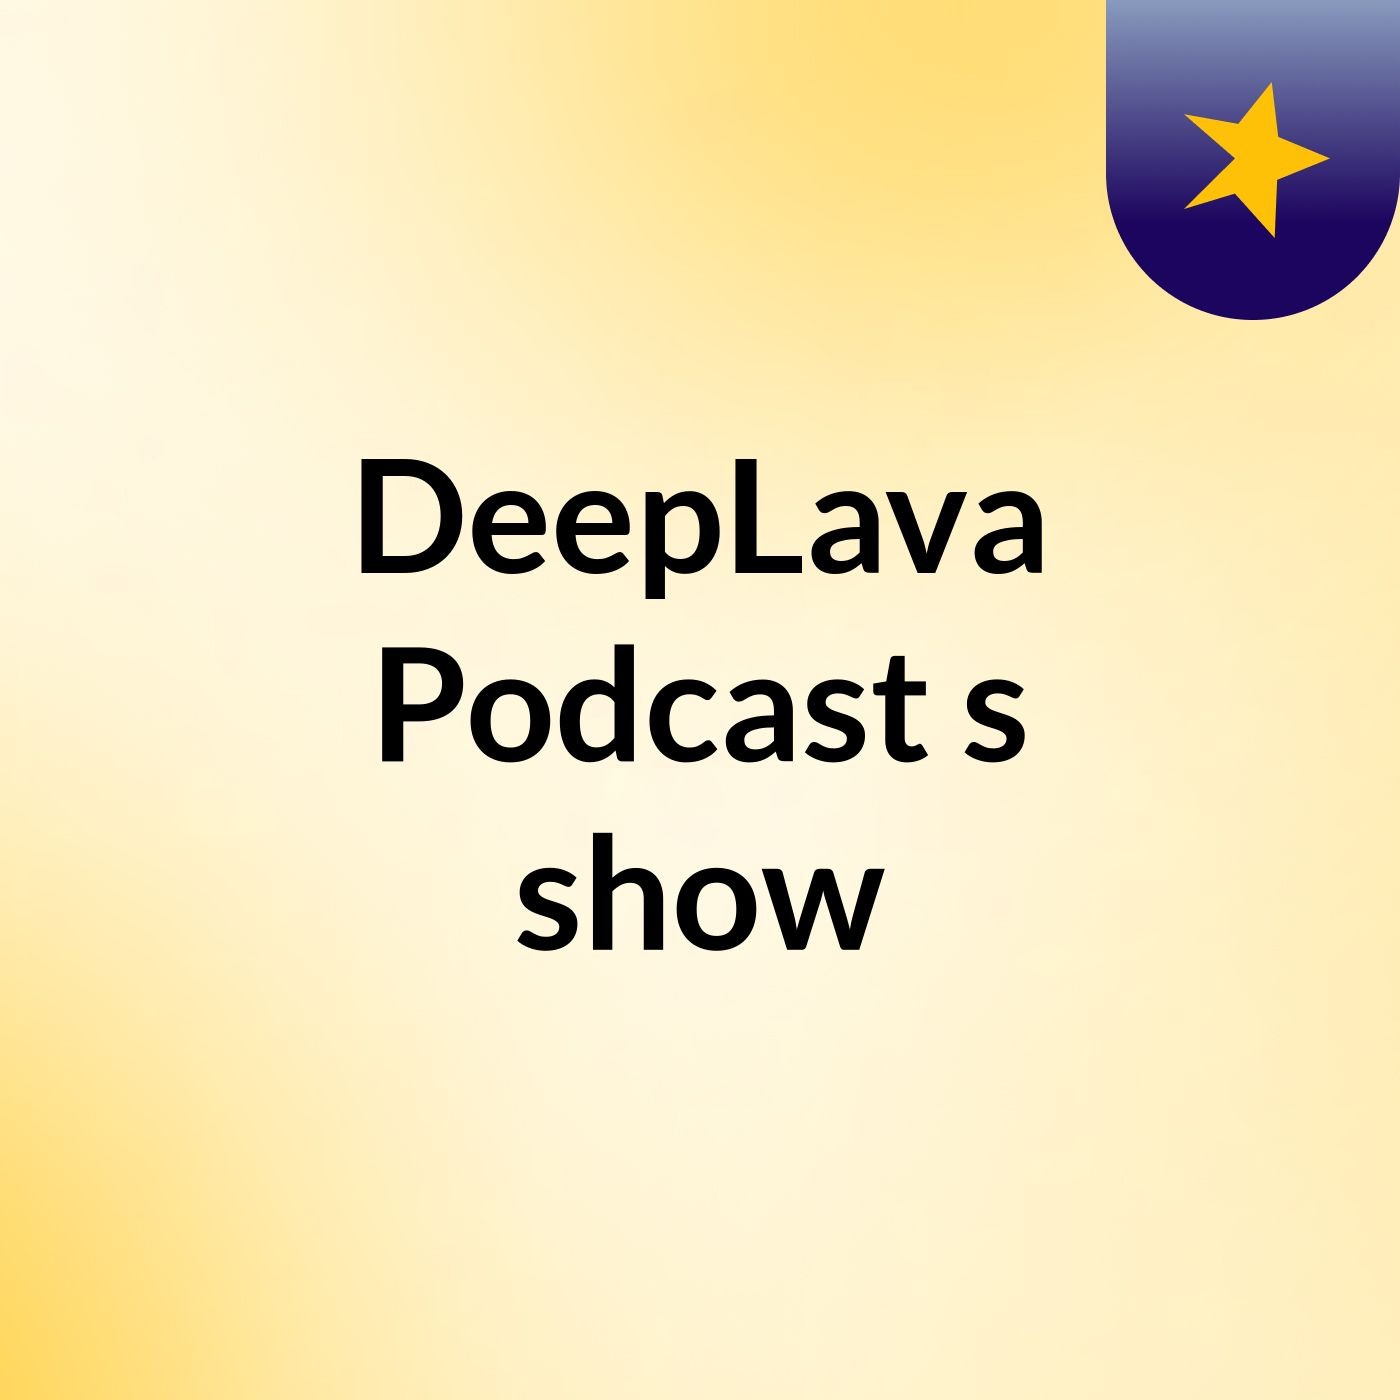 DeepLava Podcast's show